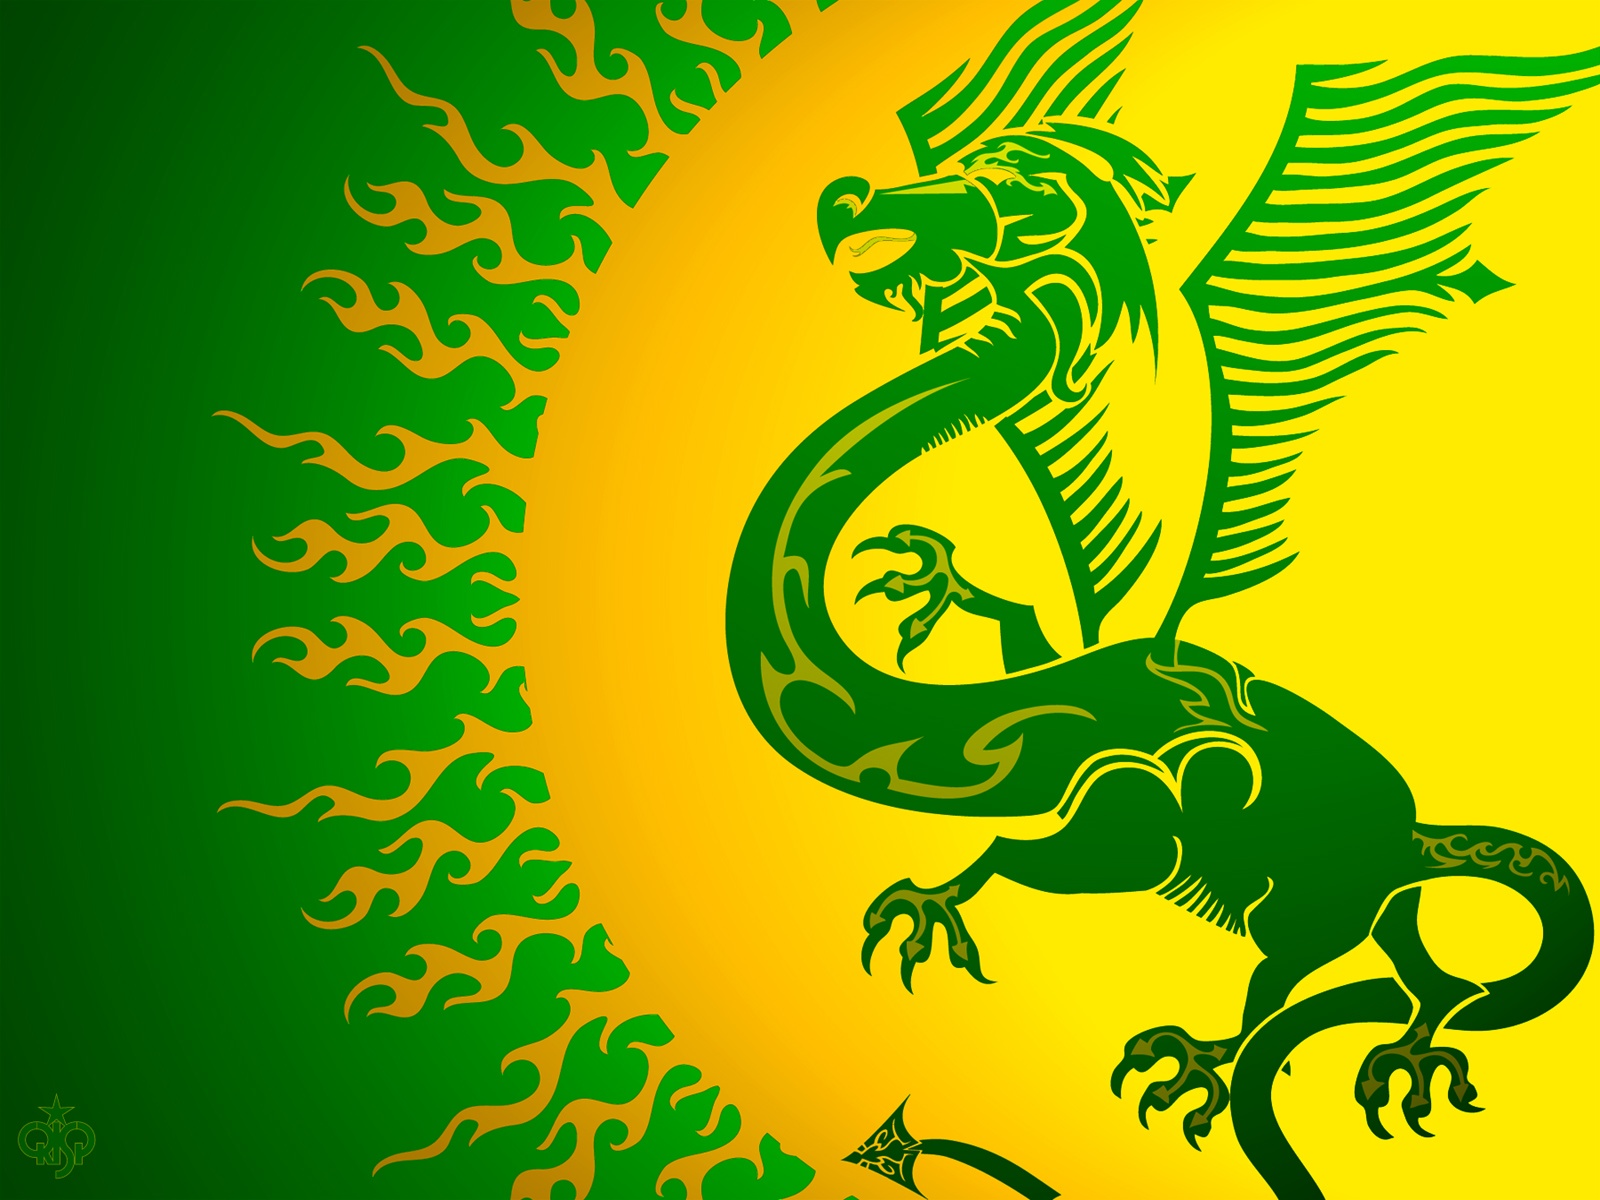 gree dragon wallpaper, green dragon picture wallpapers for desktop